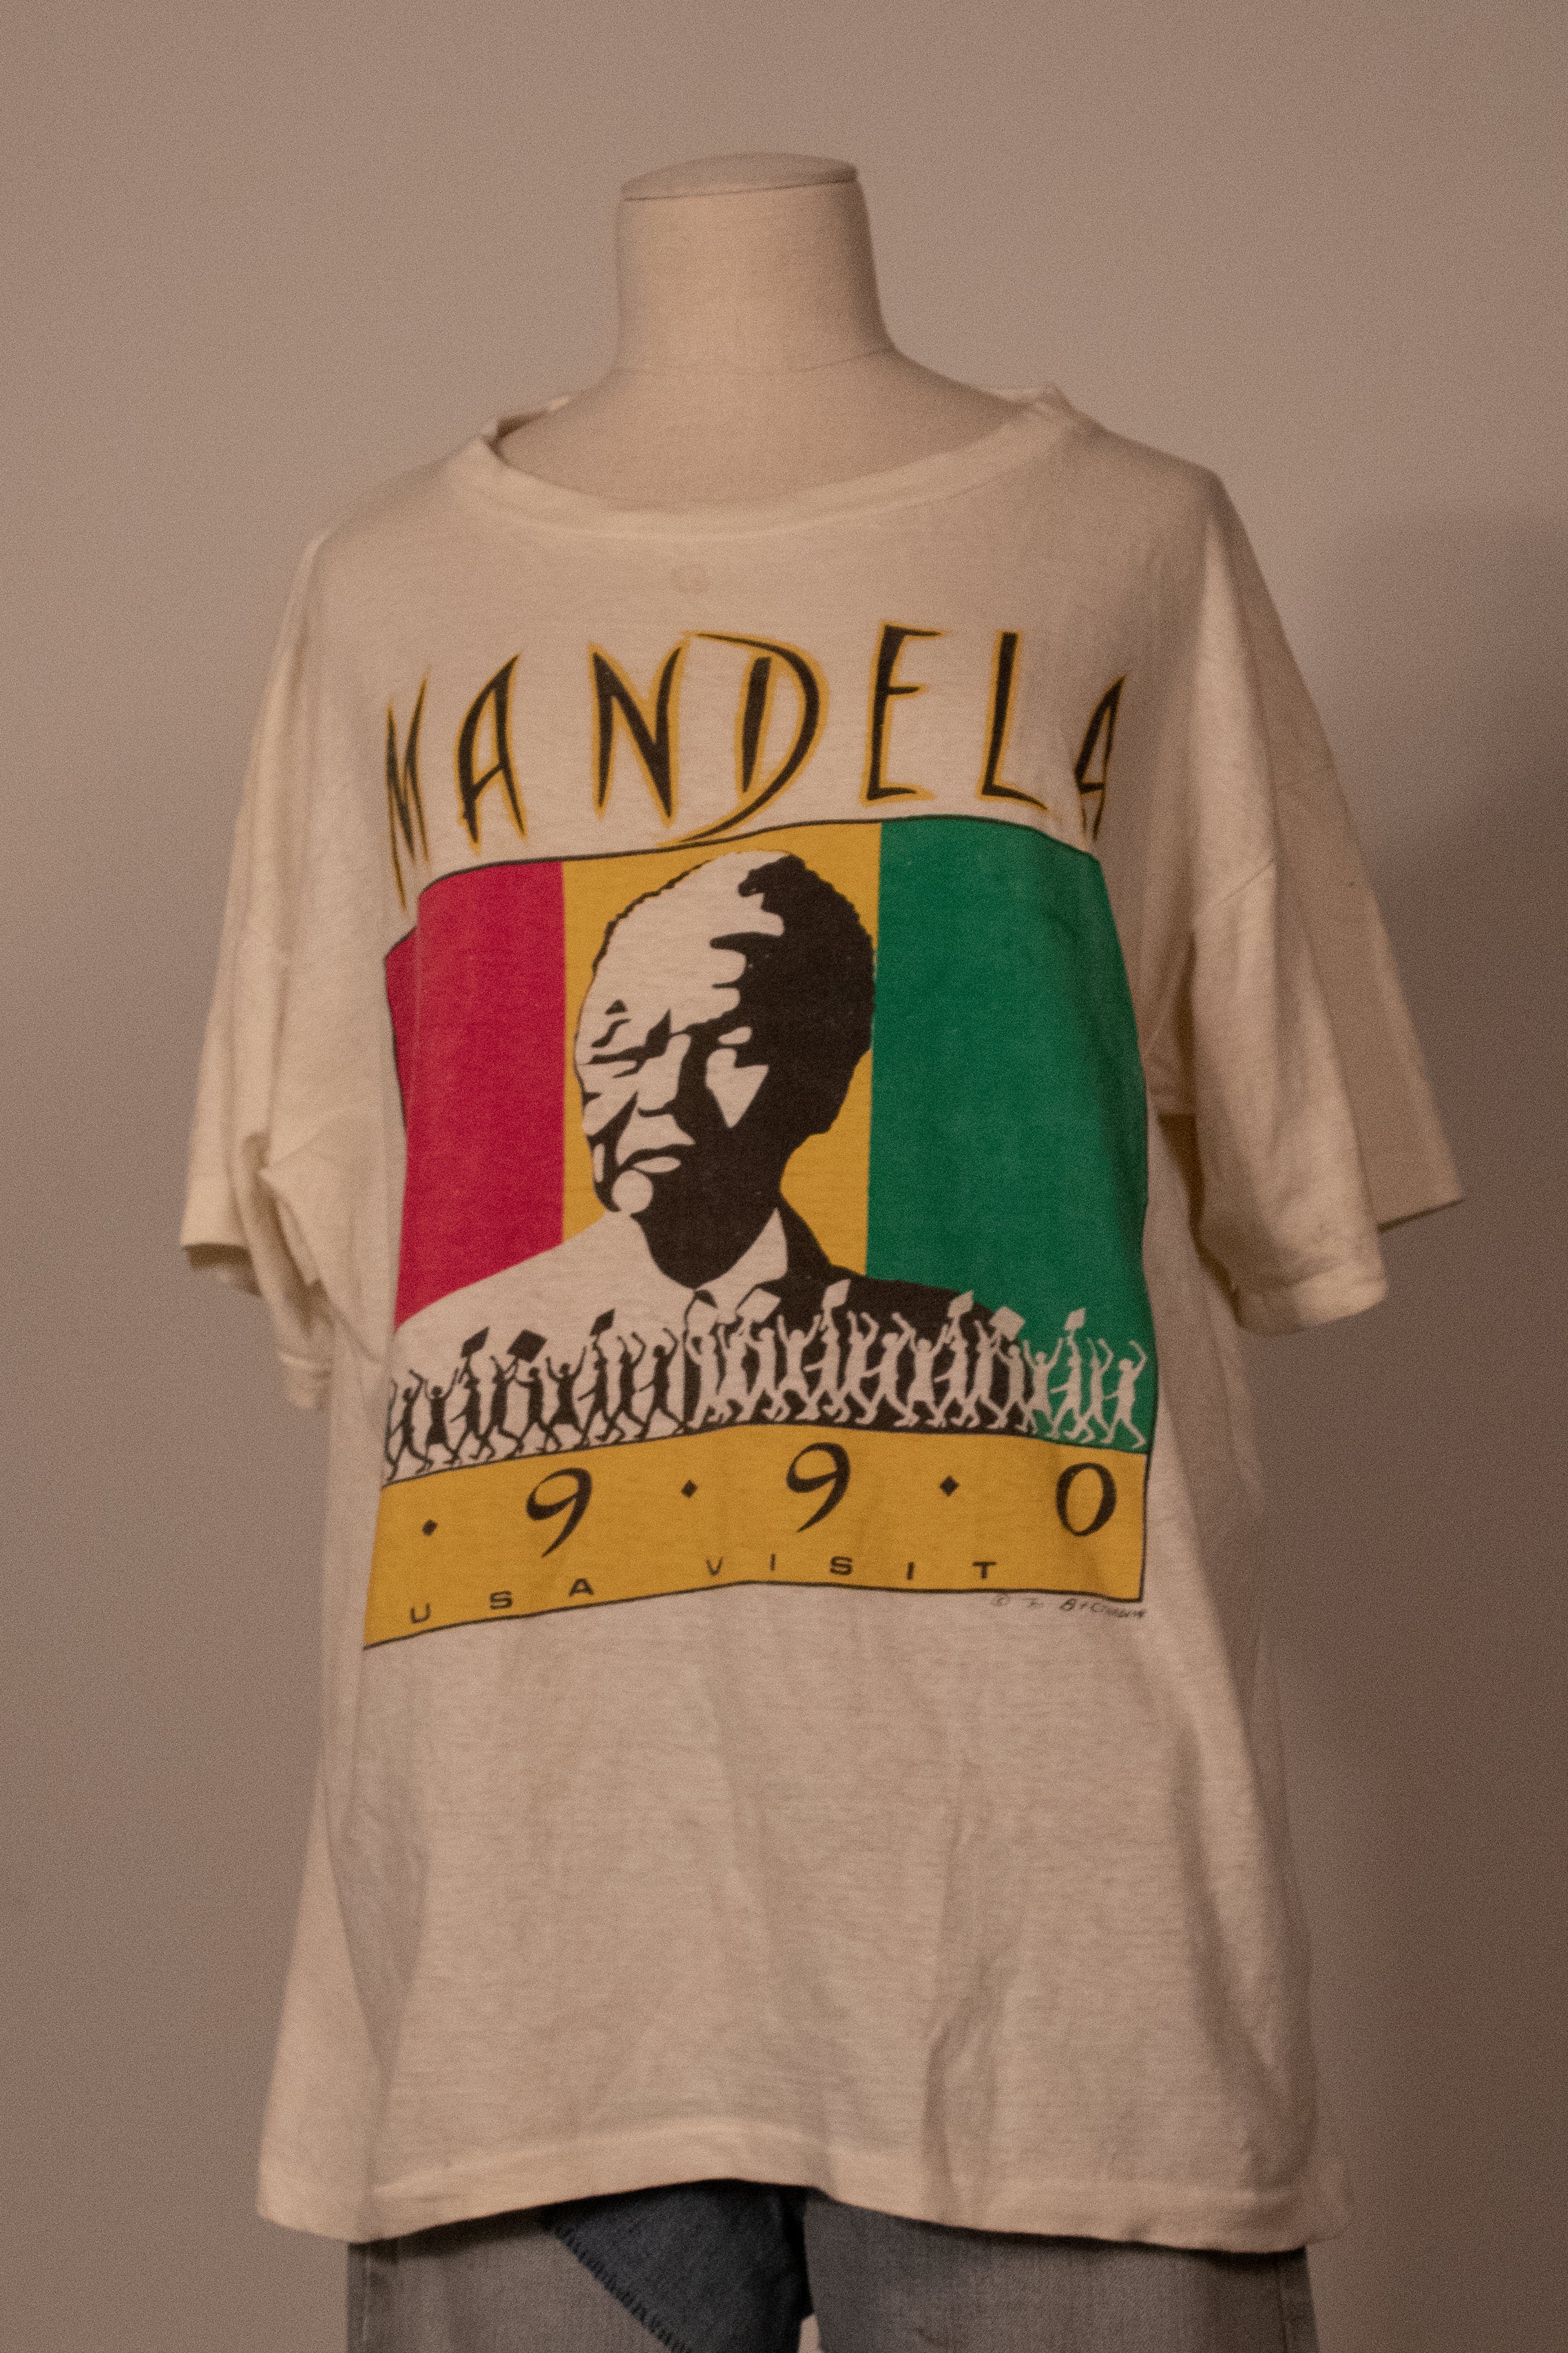 Nelson Mandela 1990 USA visit printed white cotton tee